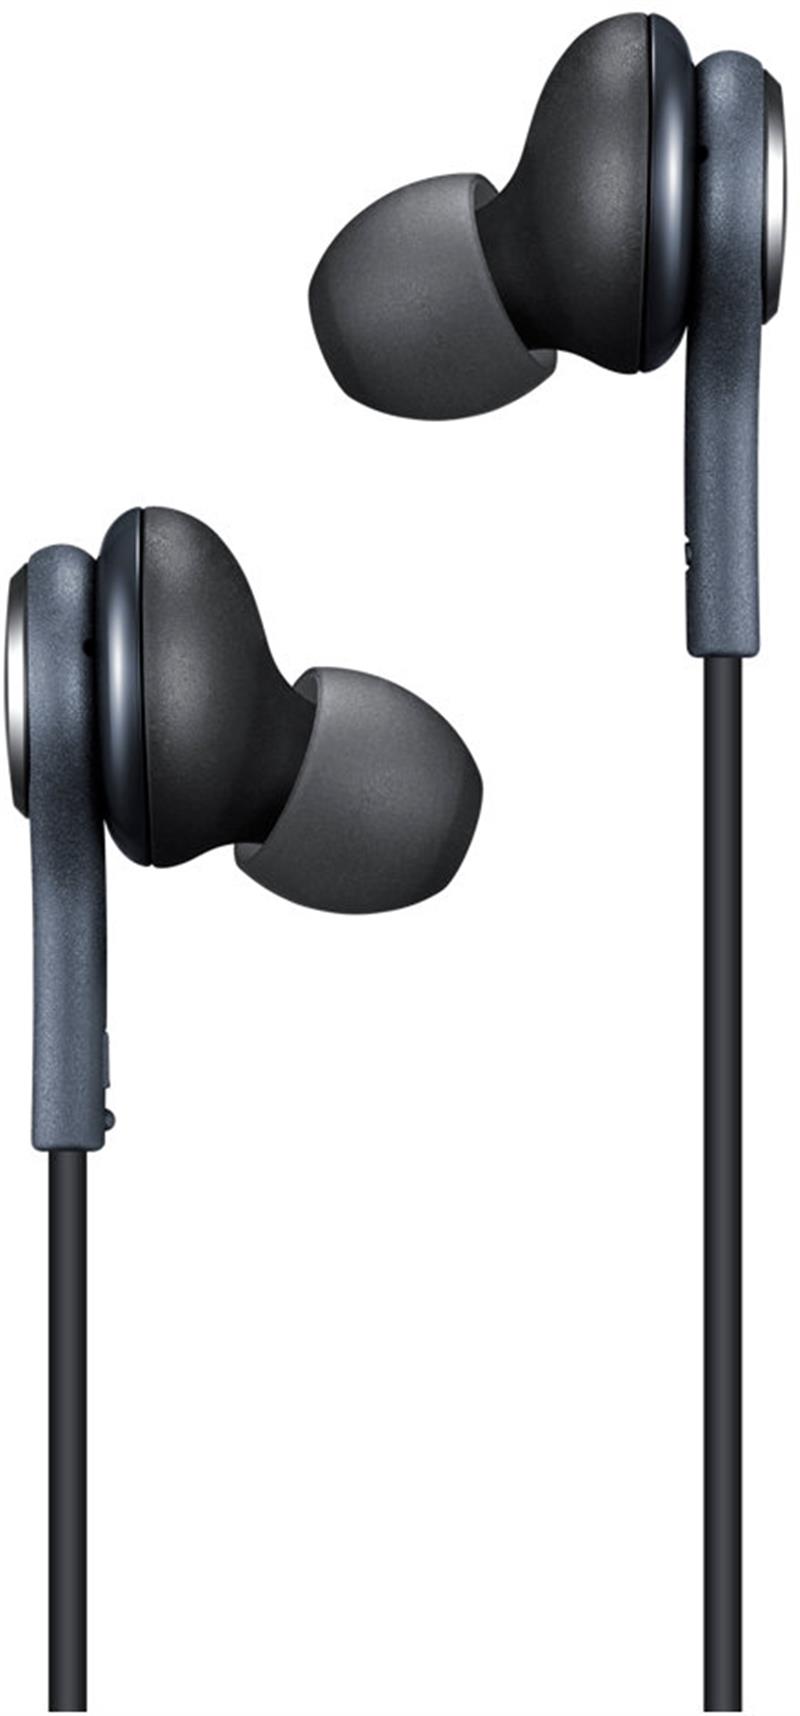 EO-IG955BSEGWW Samsung In-ear Tuned by AKG Stereo Headset Black Bulk